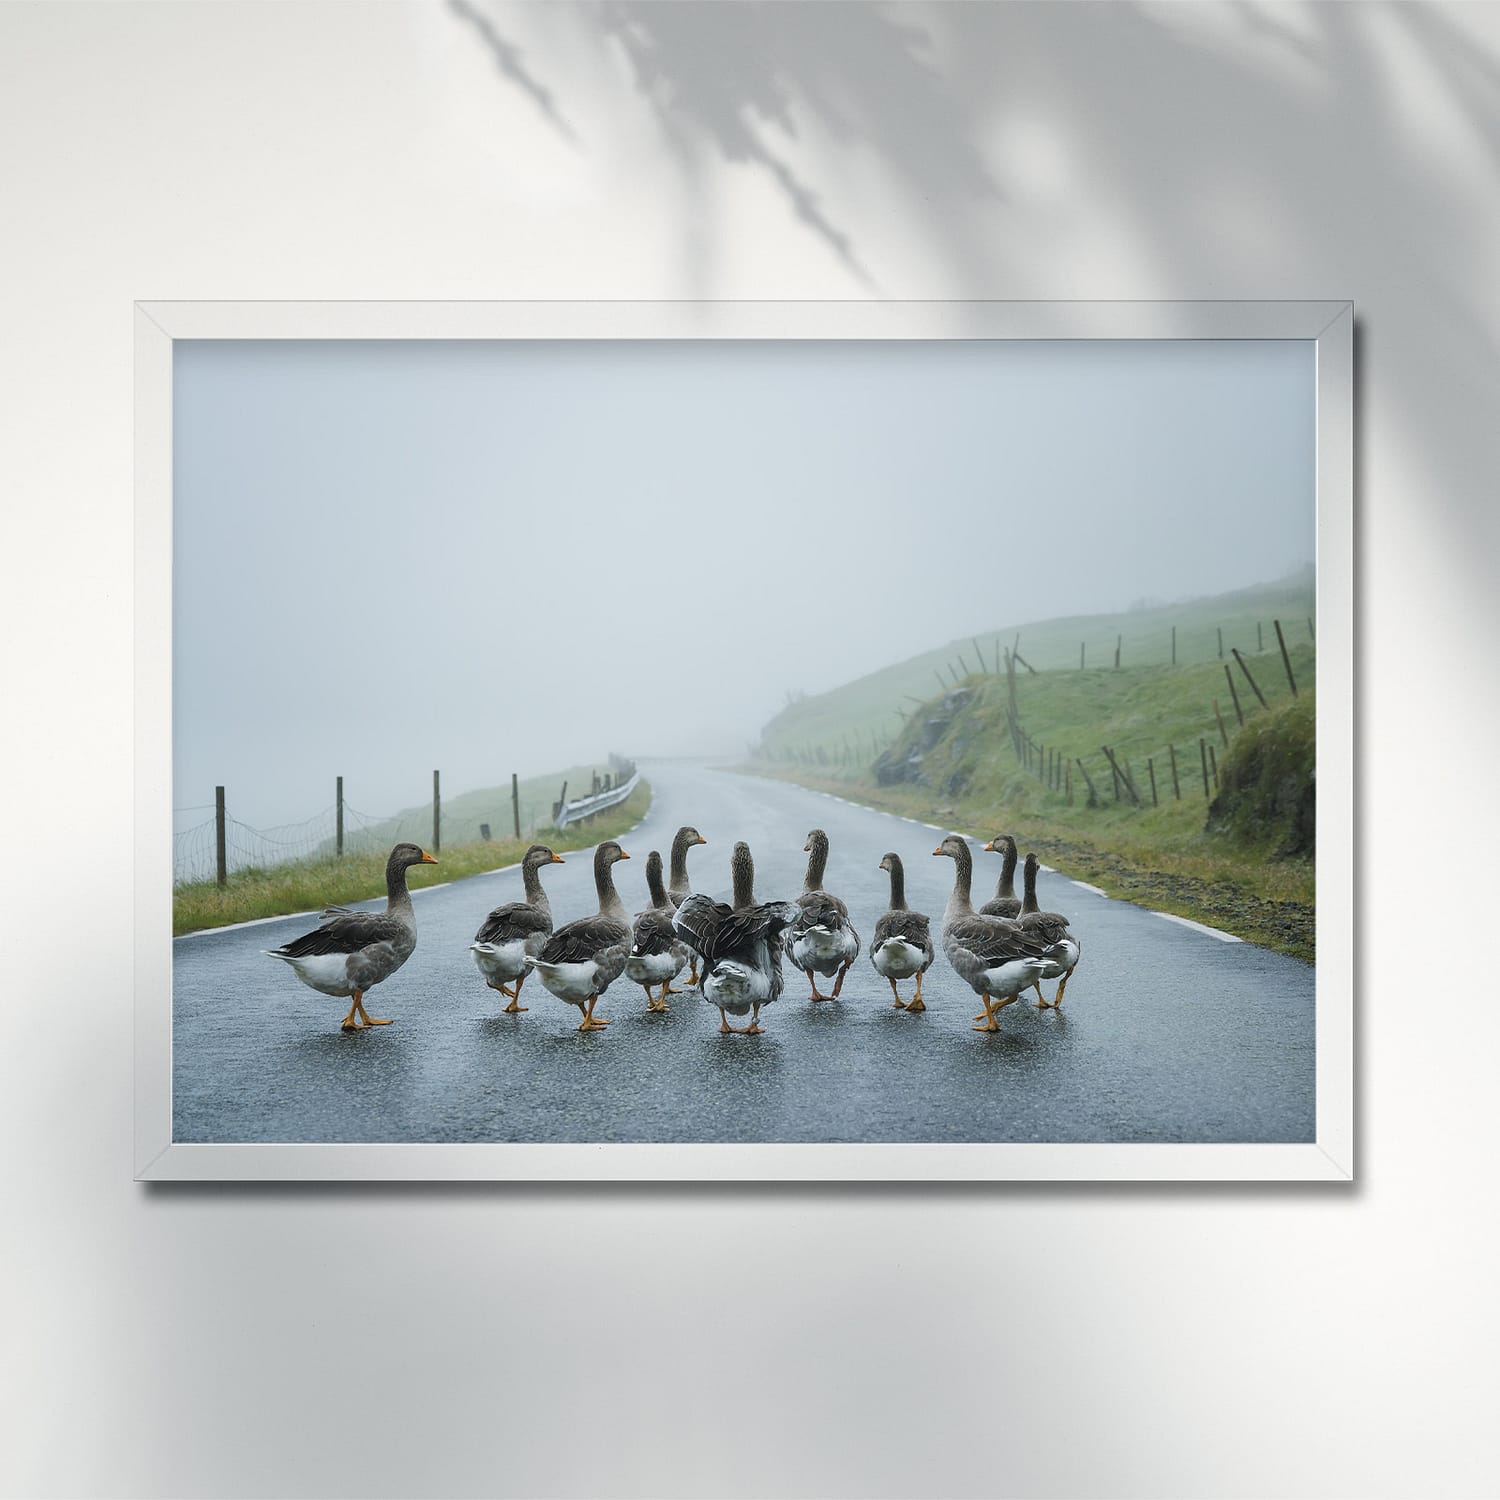 GEESE WALKING ON THE ROAD, FAROE ISLANDS - POSTER geese walking road foggy faroe islands poster frame 21664